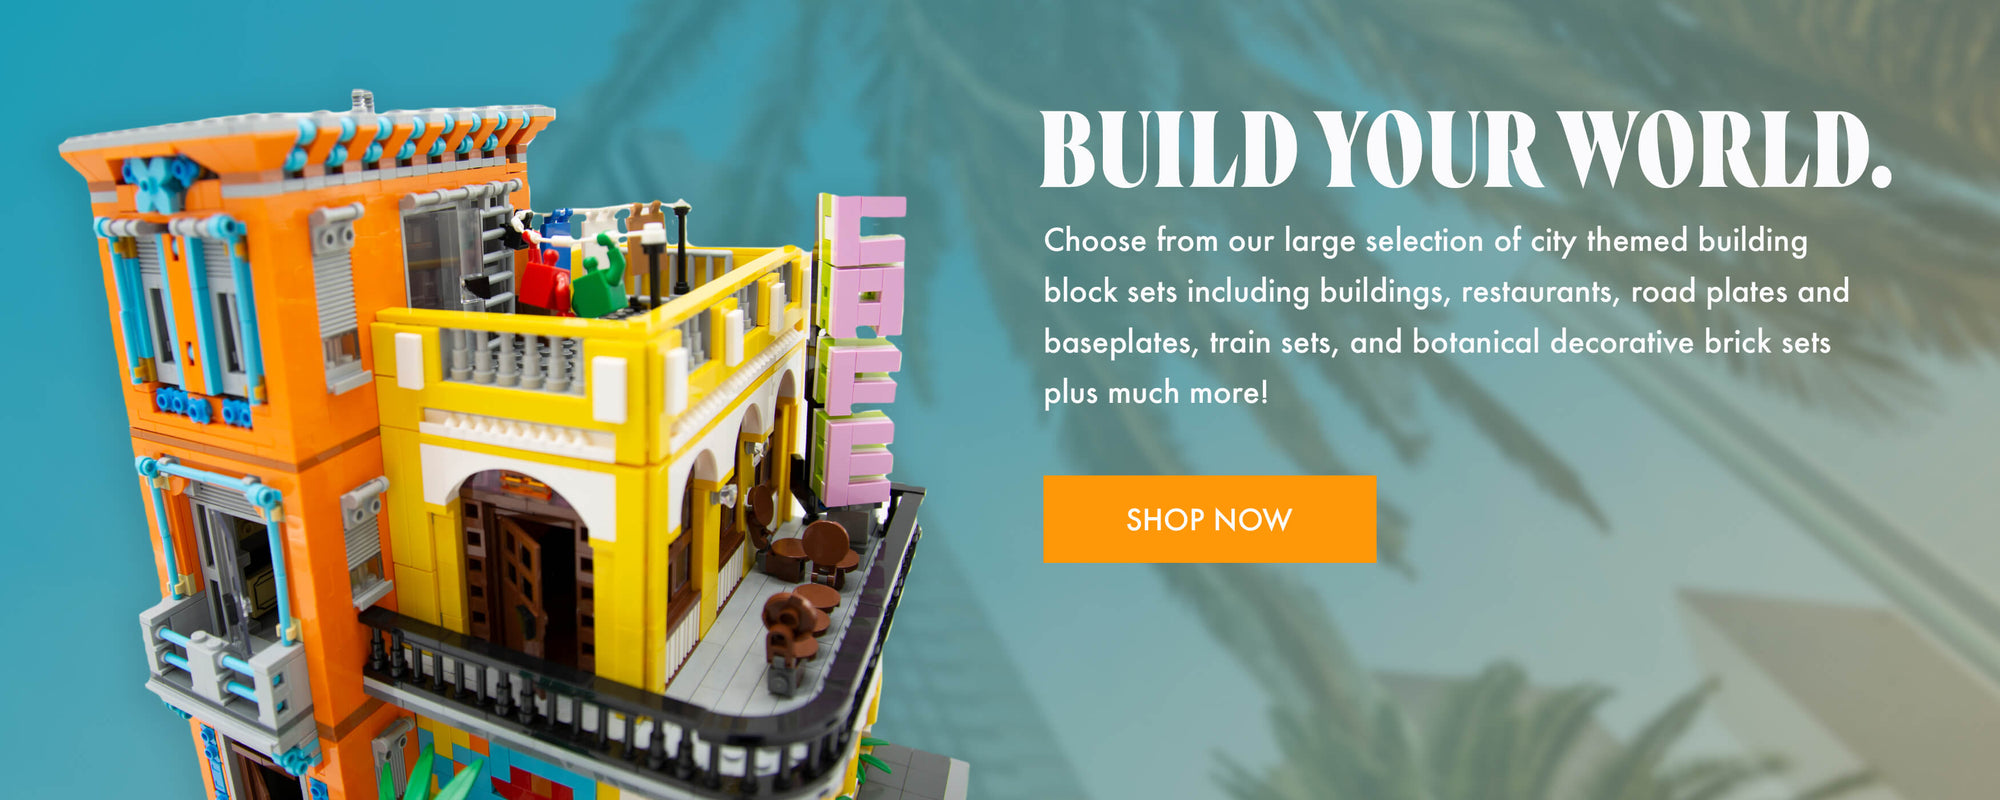 Best Compatible Lego Military Sets Shop - BrickArmyToys